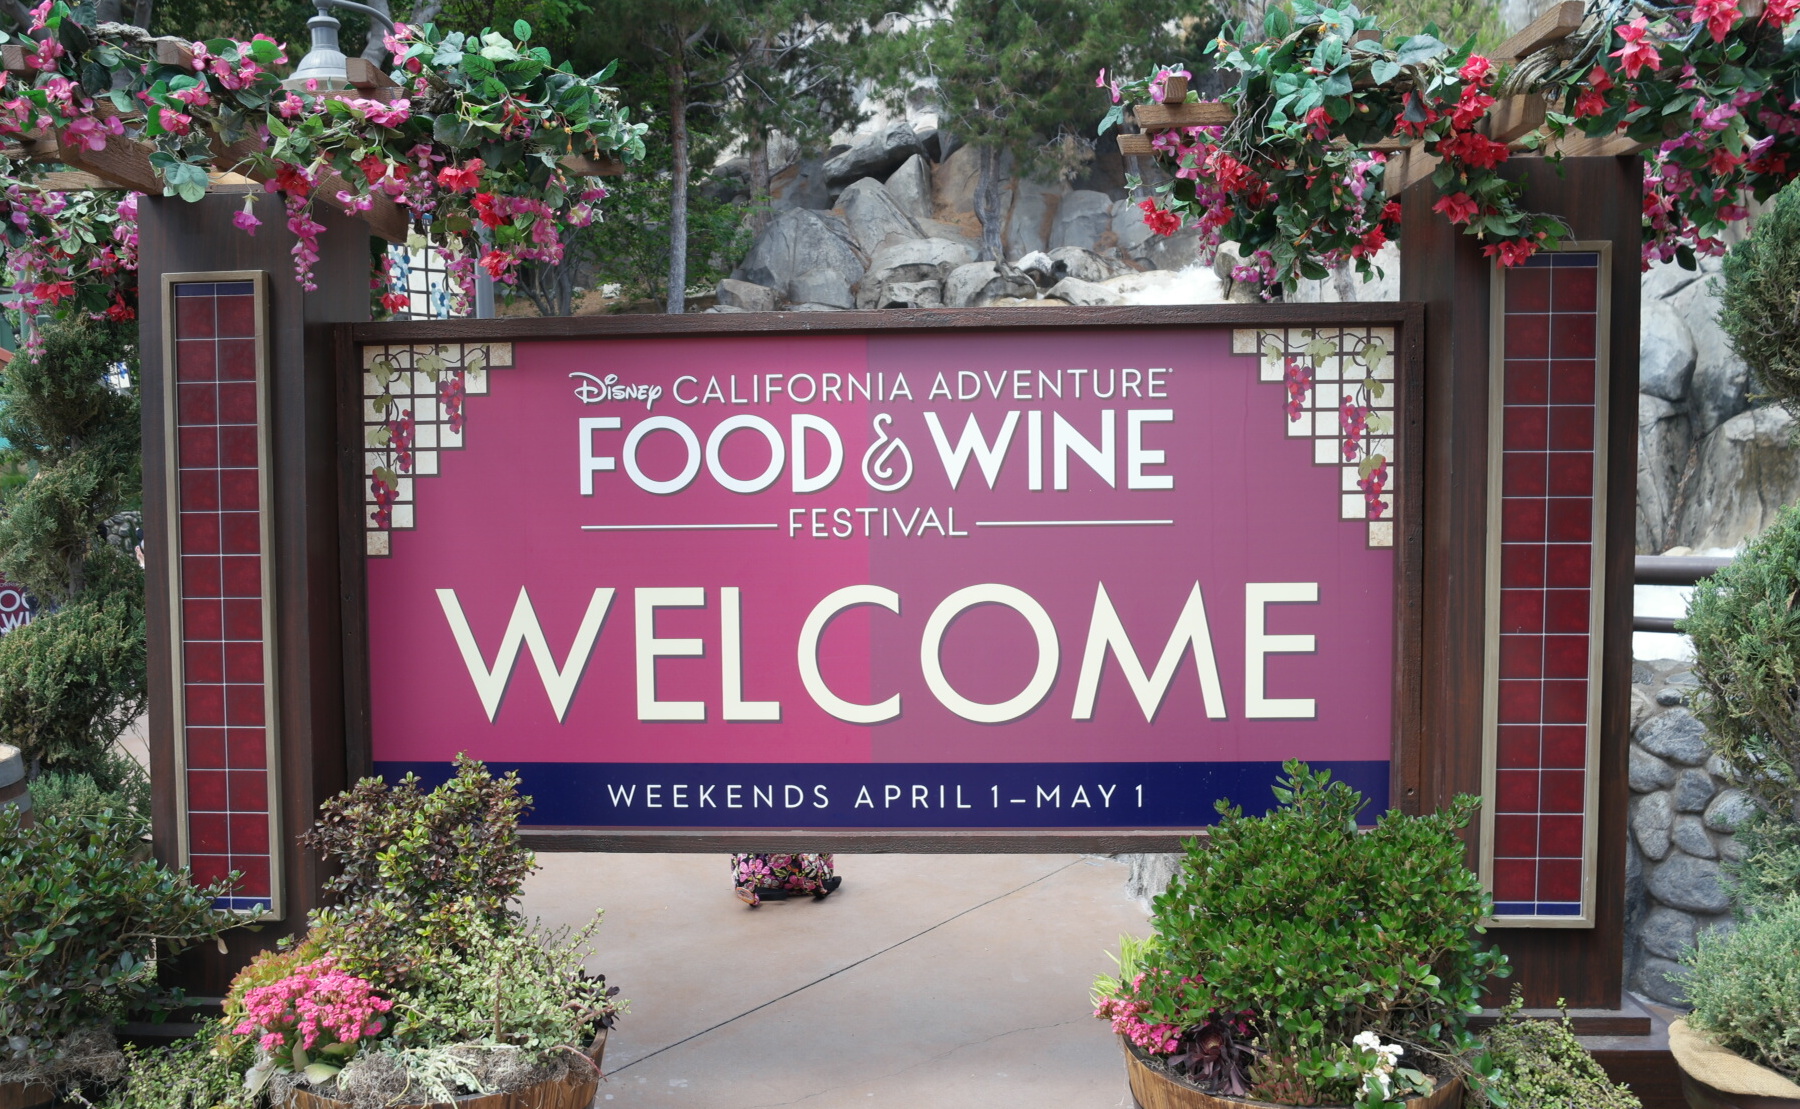 Disney California Adventure Food & Wine Festival 2016